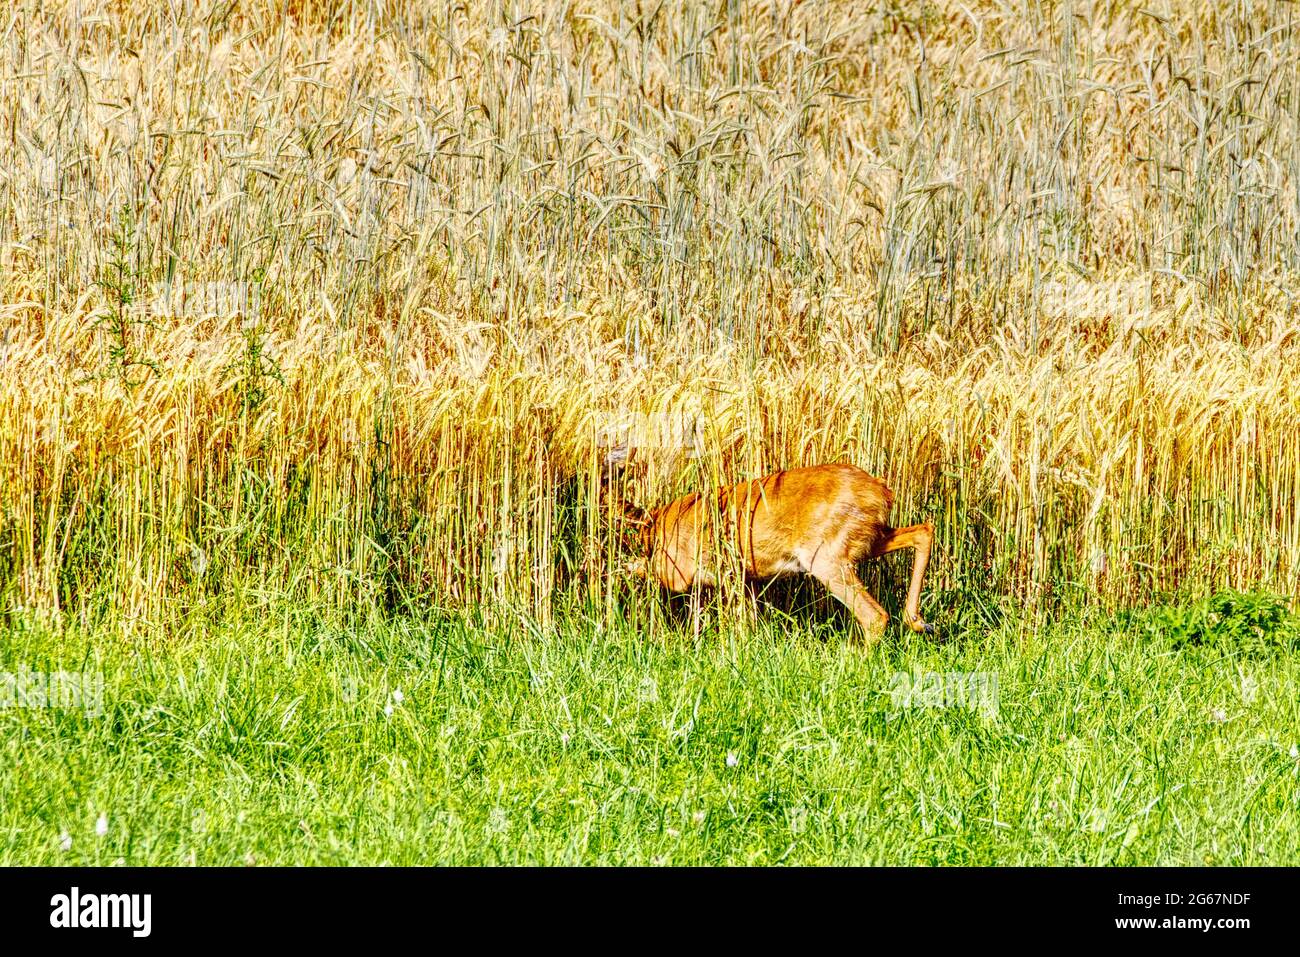 deer on the meadow against grain field Stock Photo